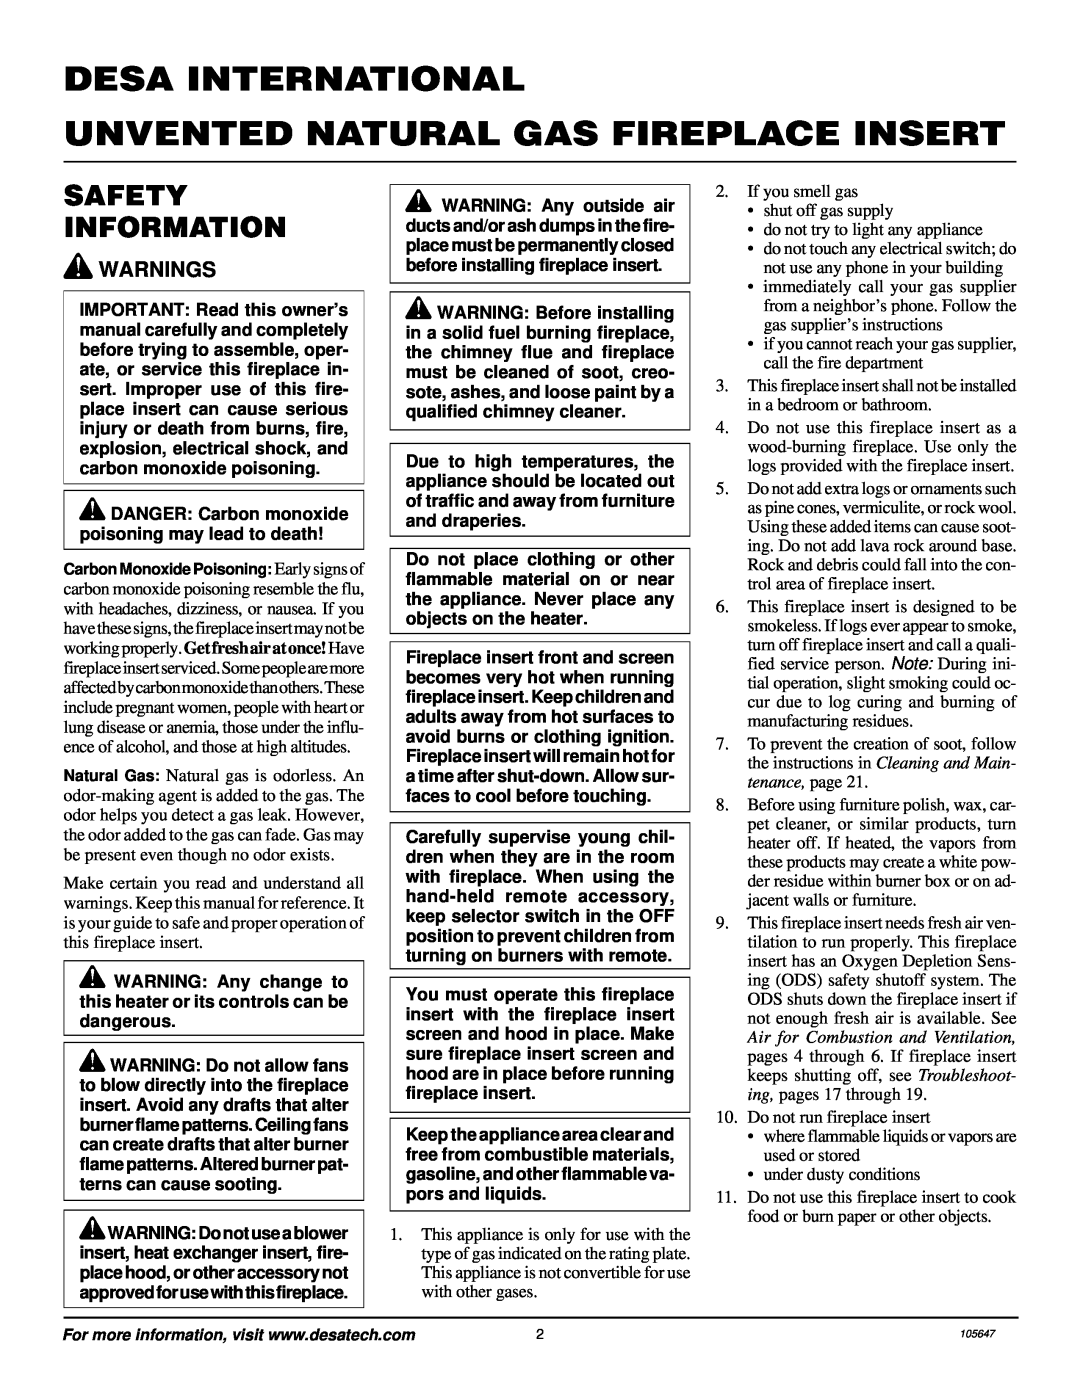 Desa VI33NR installation manual Desa International, Unvented Natural Gas Fireplace Insert, Safety Information 